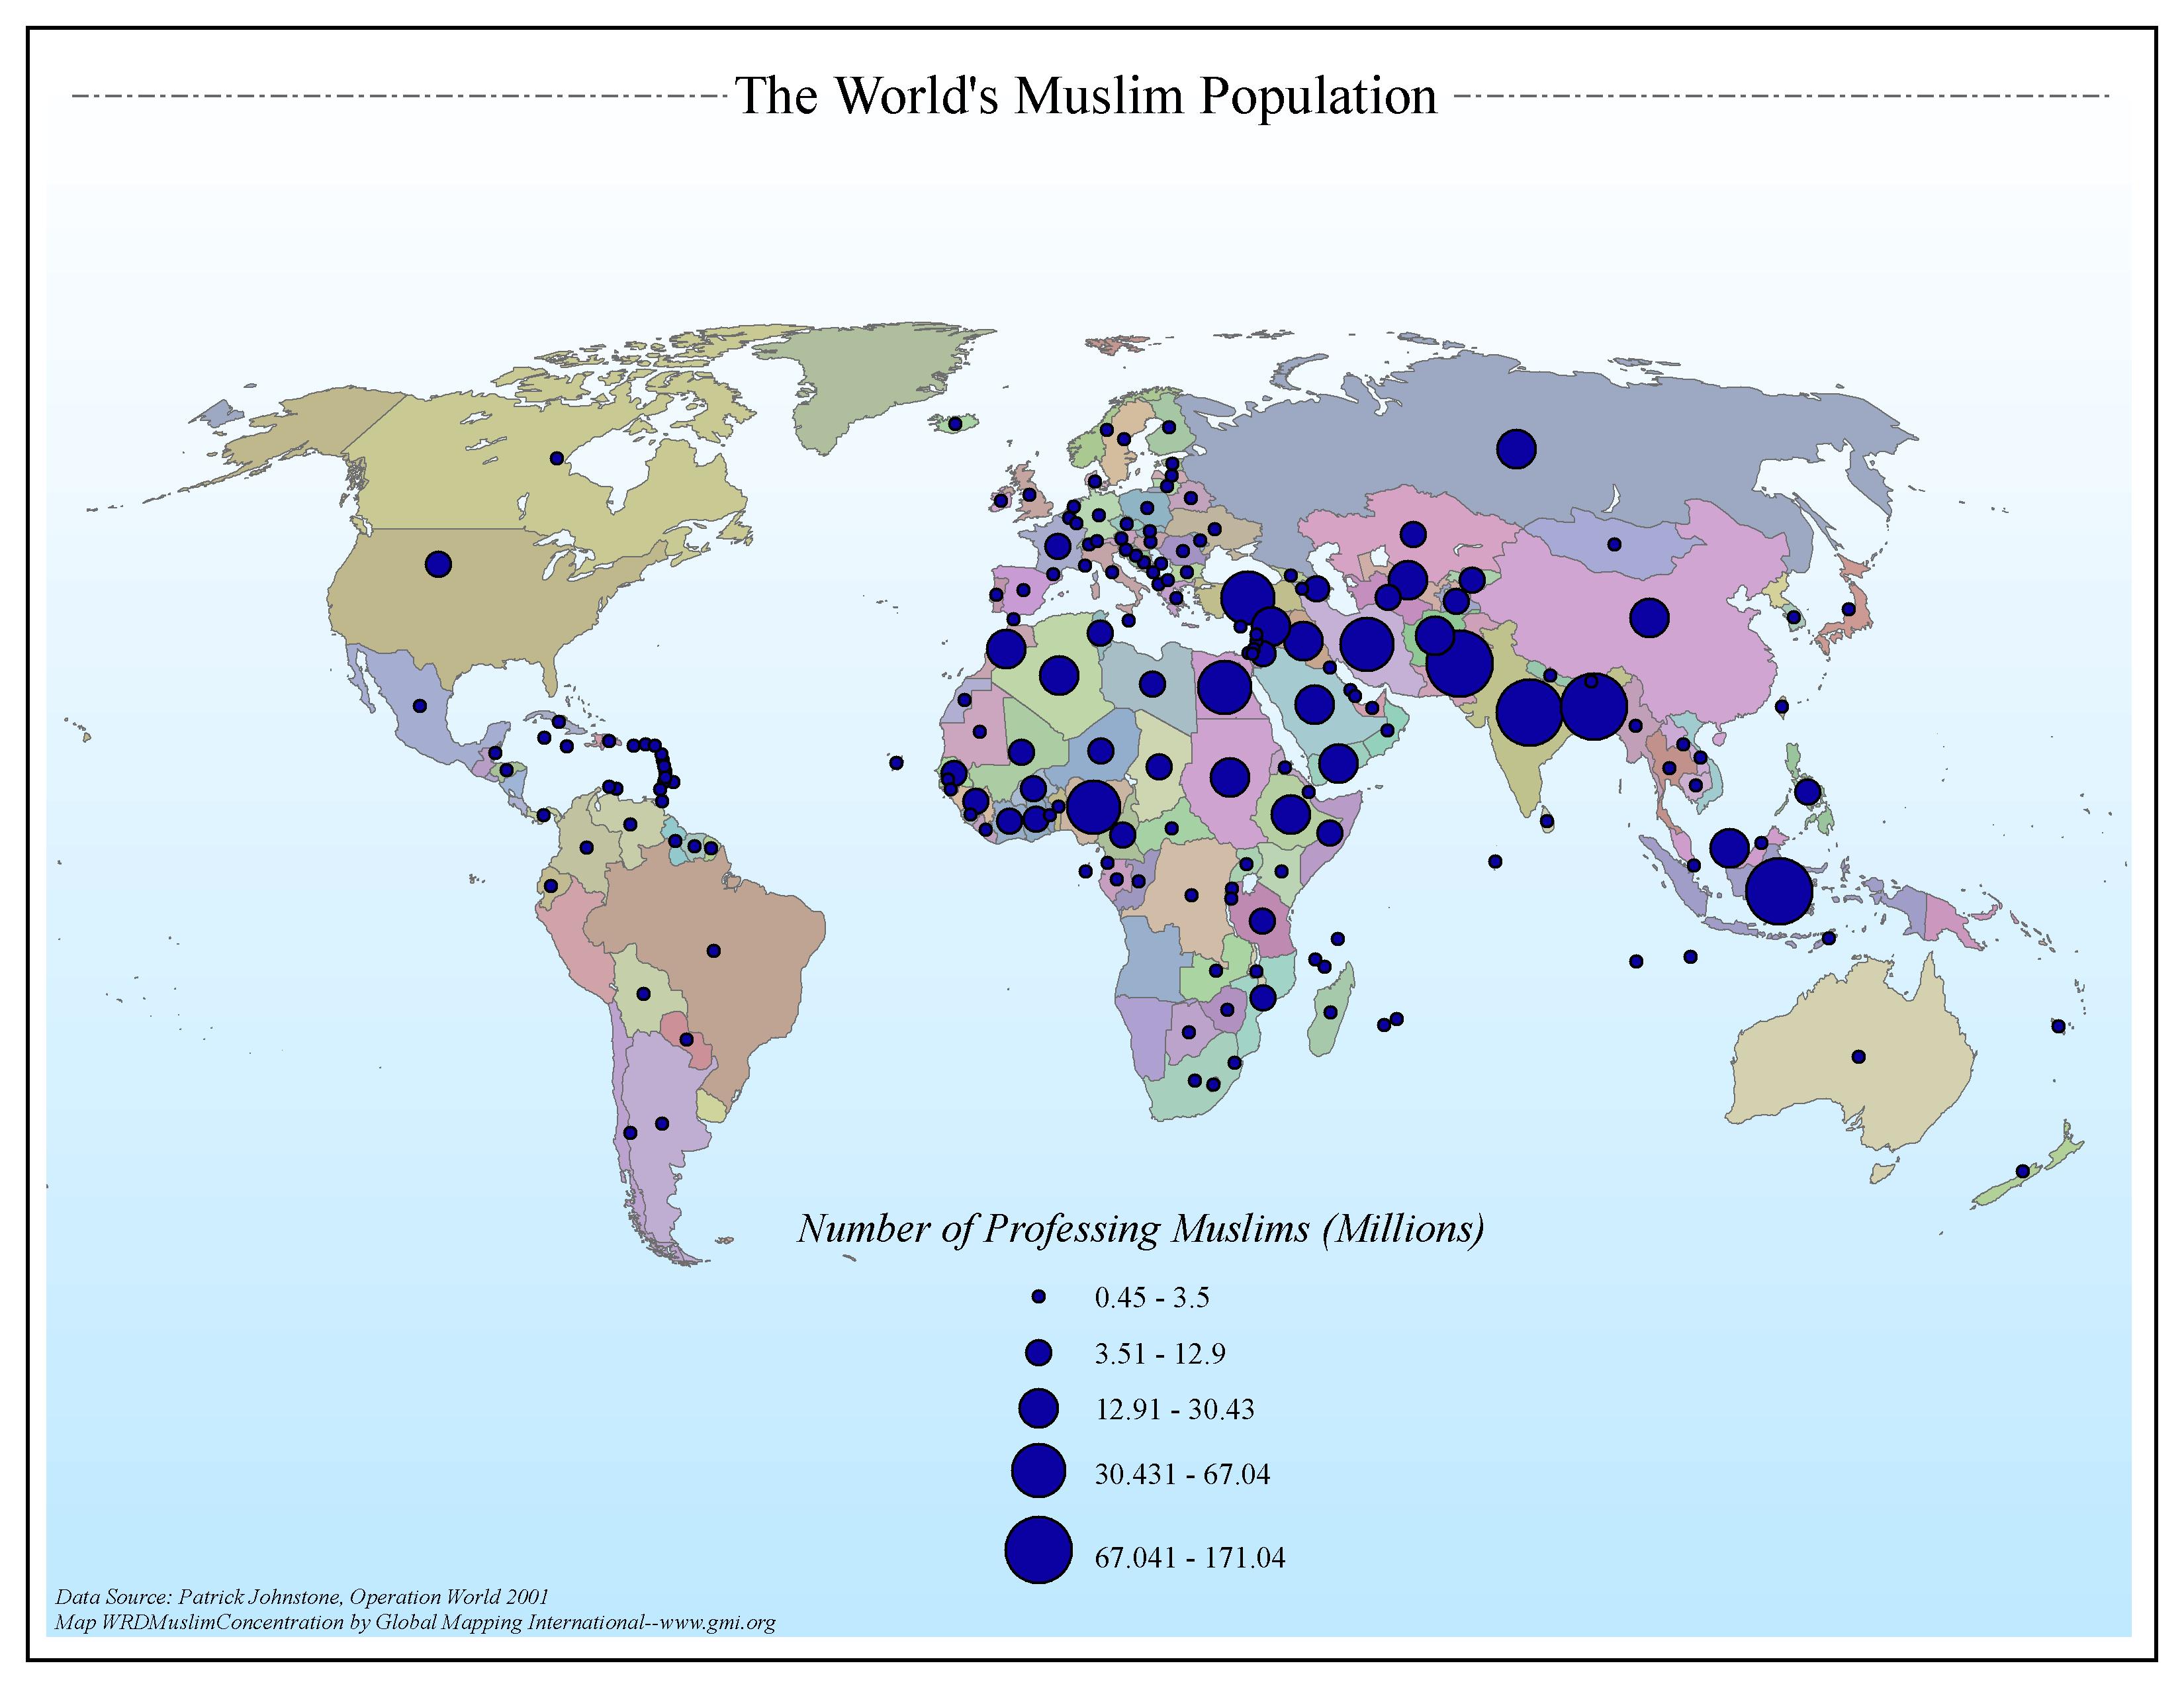 The World's Muslim Population (by population)